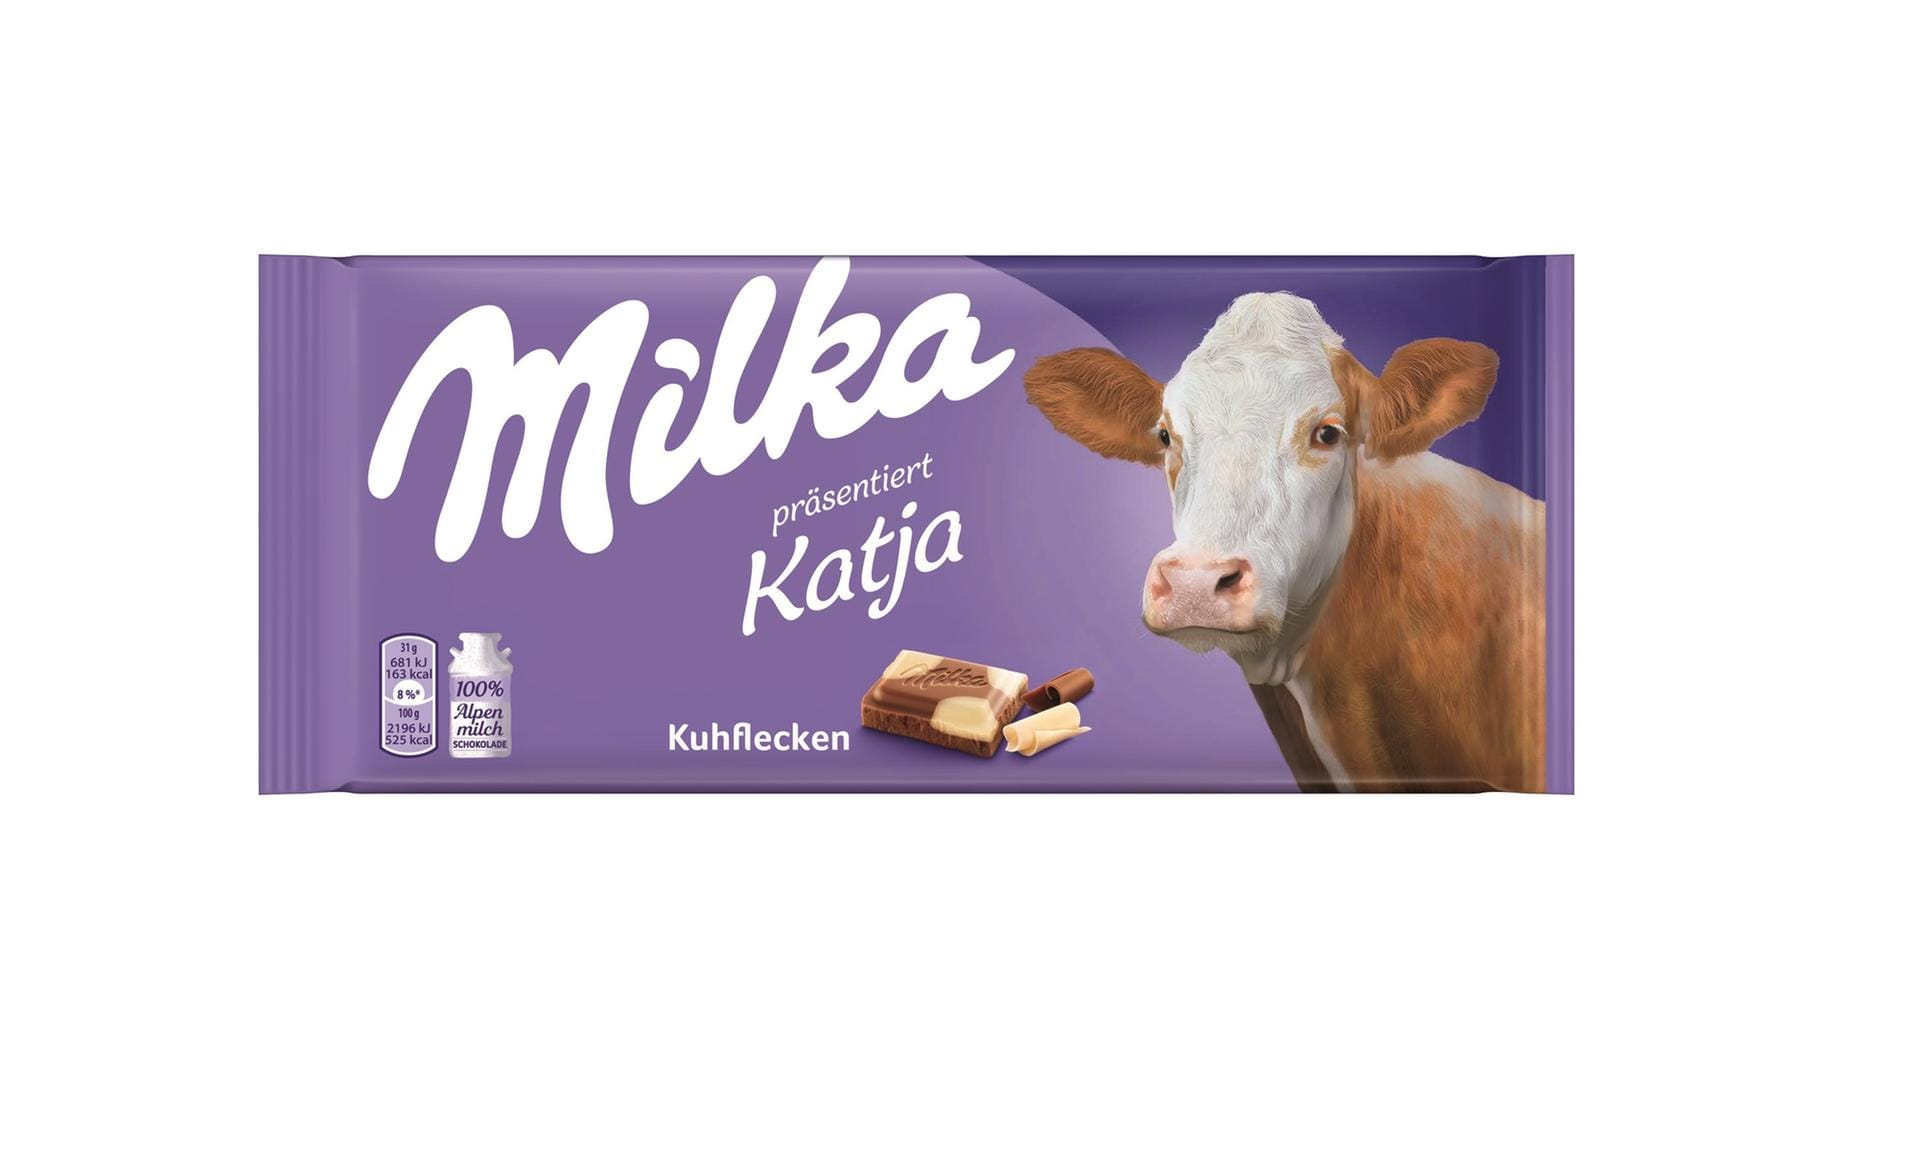 Neue Verpackung Milka Kuhflecken: Die abgebildeten Kühe heißen Katja, Gerda, Lola, Moocha und Marisa.